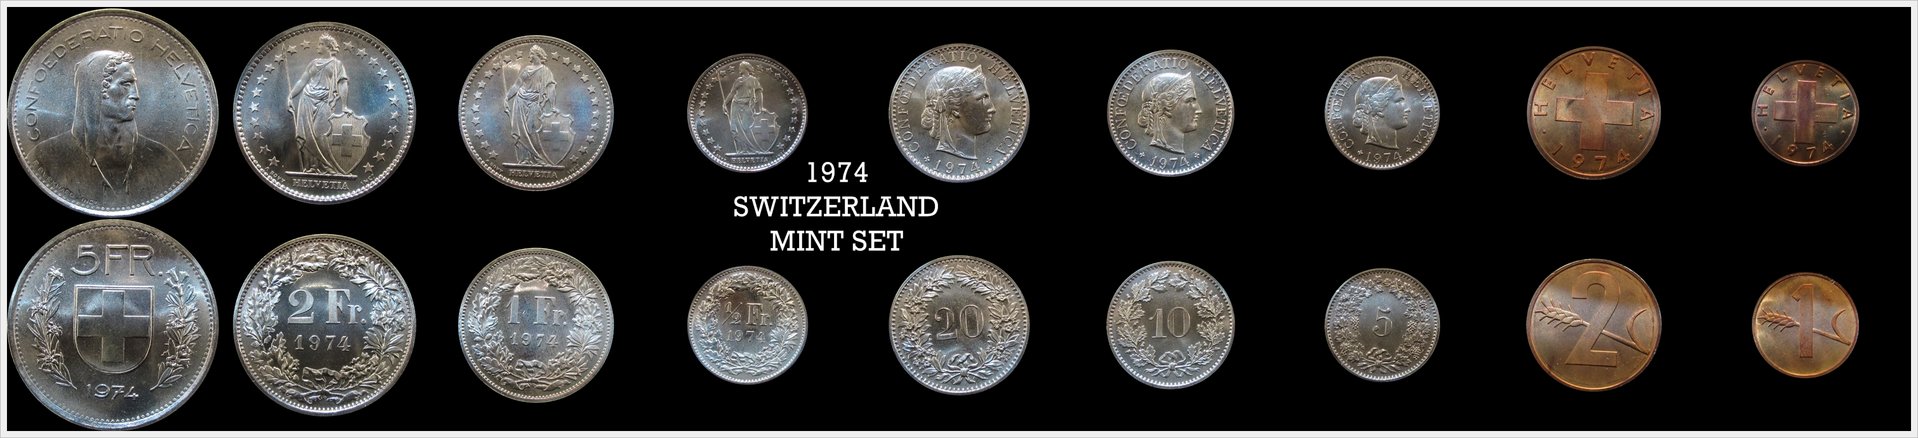 1974 switzerland mint set.jpg